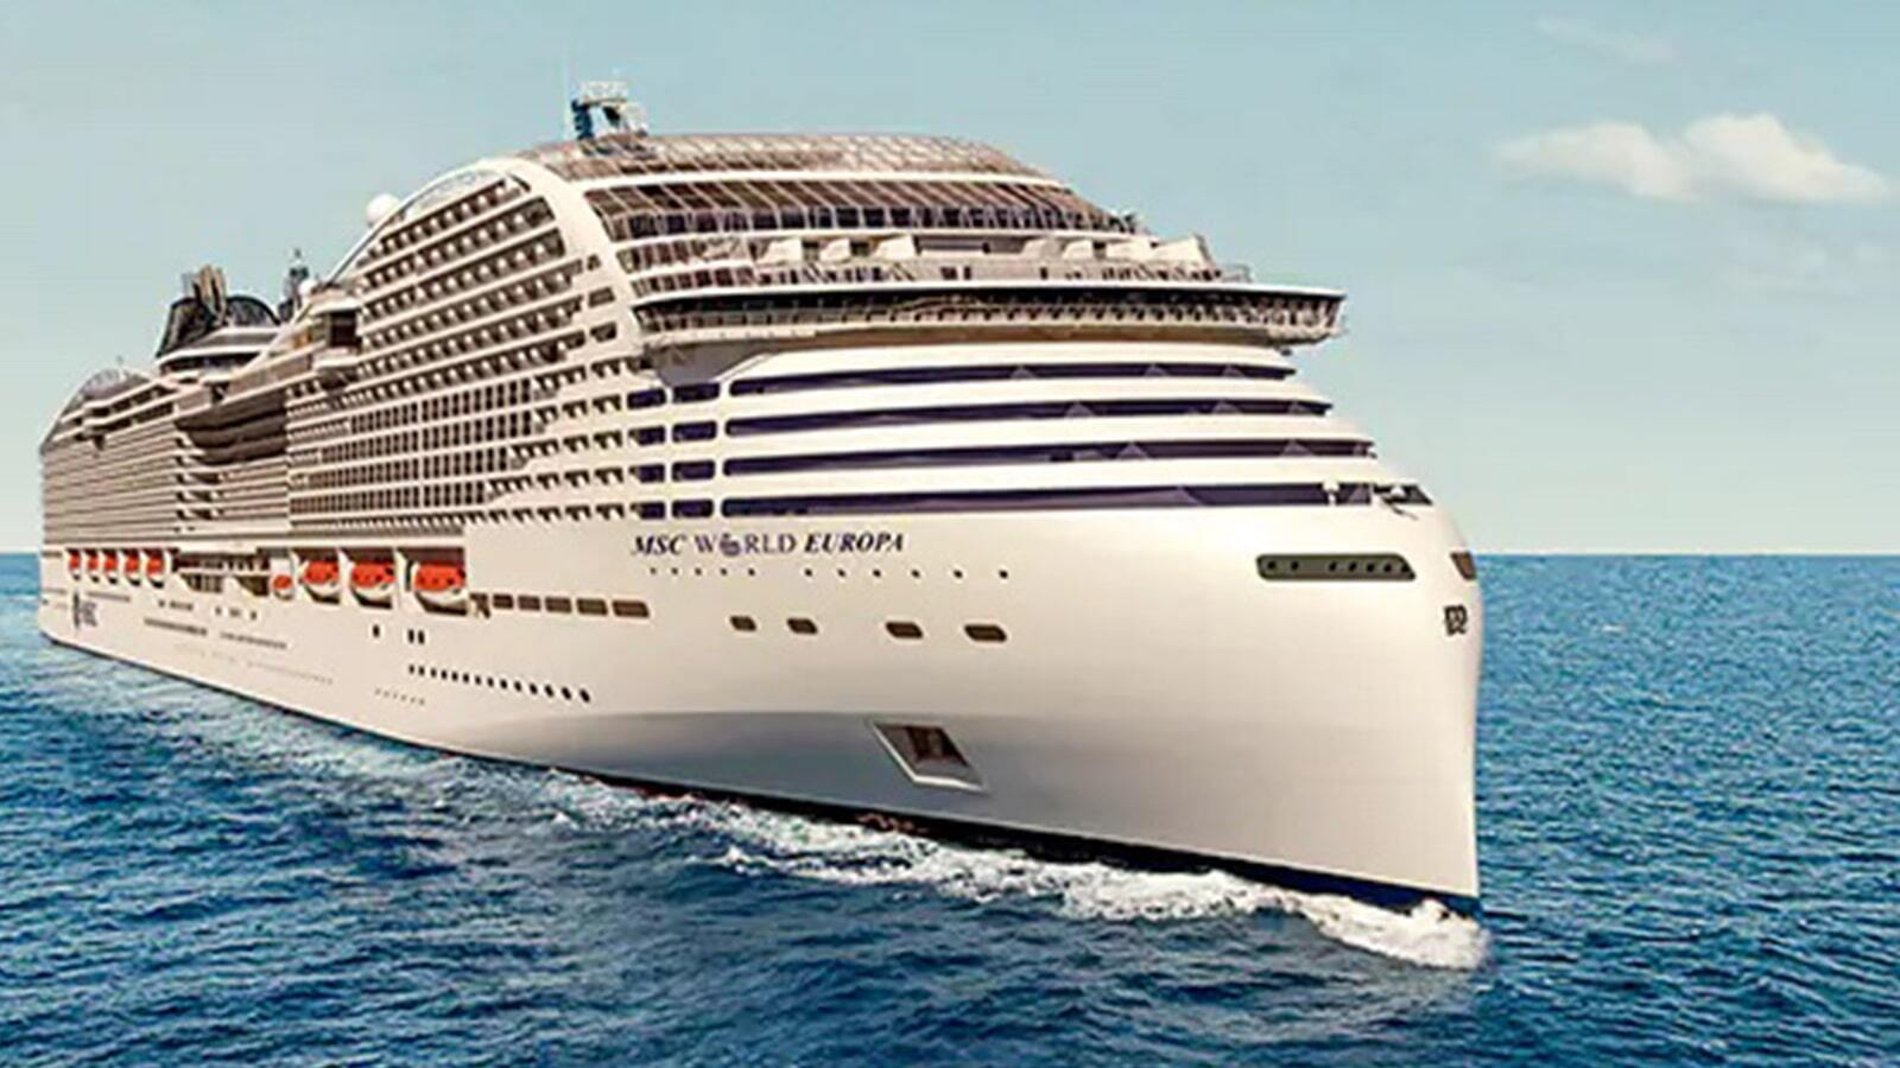 Msc Cruises Announces Dedicated Family Areas Aboard New Ship, World Europa